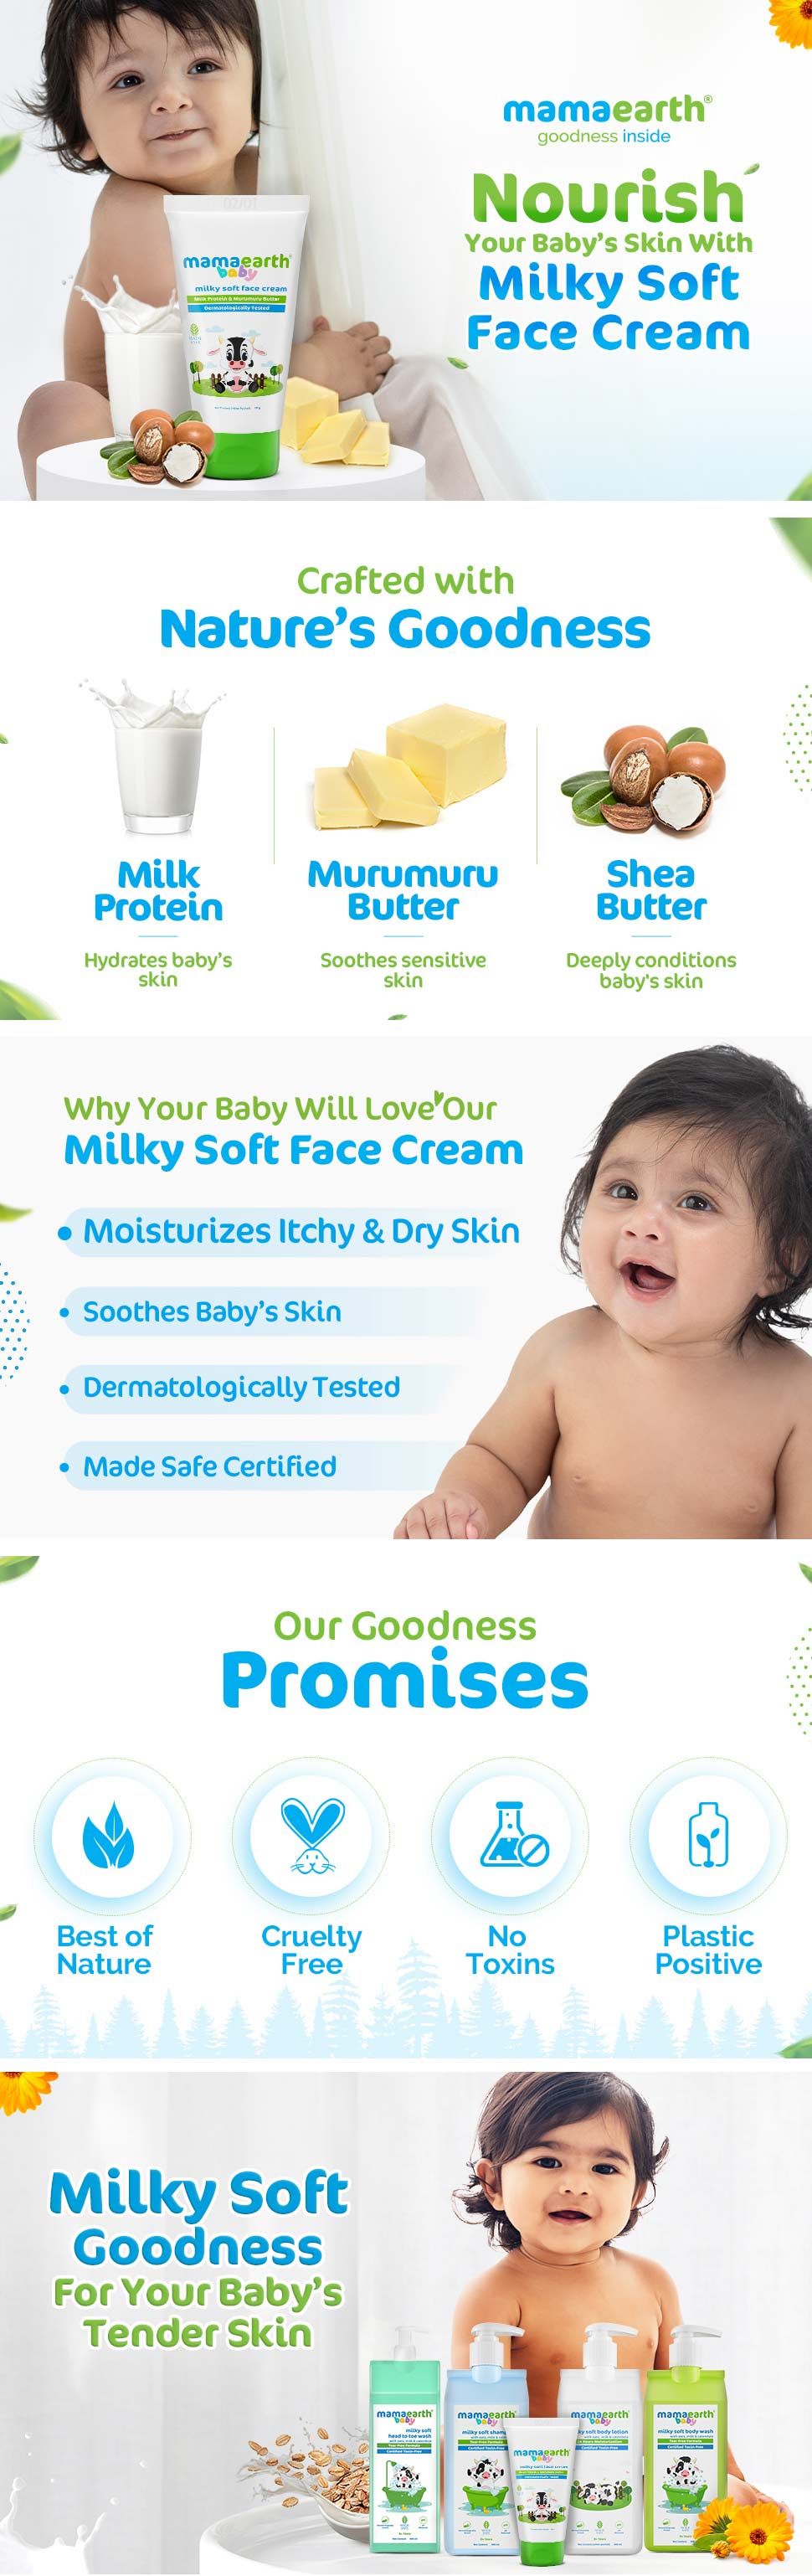 Mamaearth Milky soft face cream